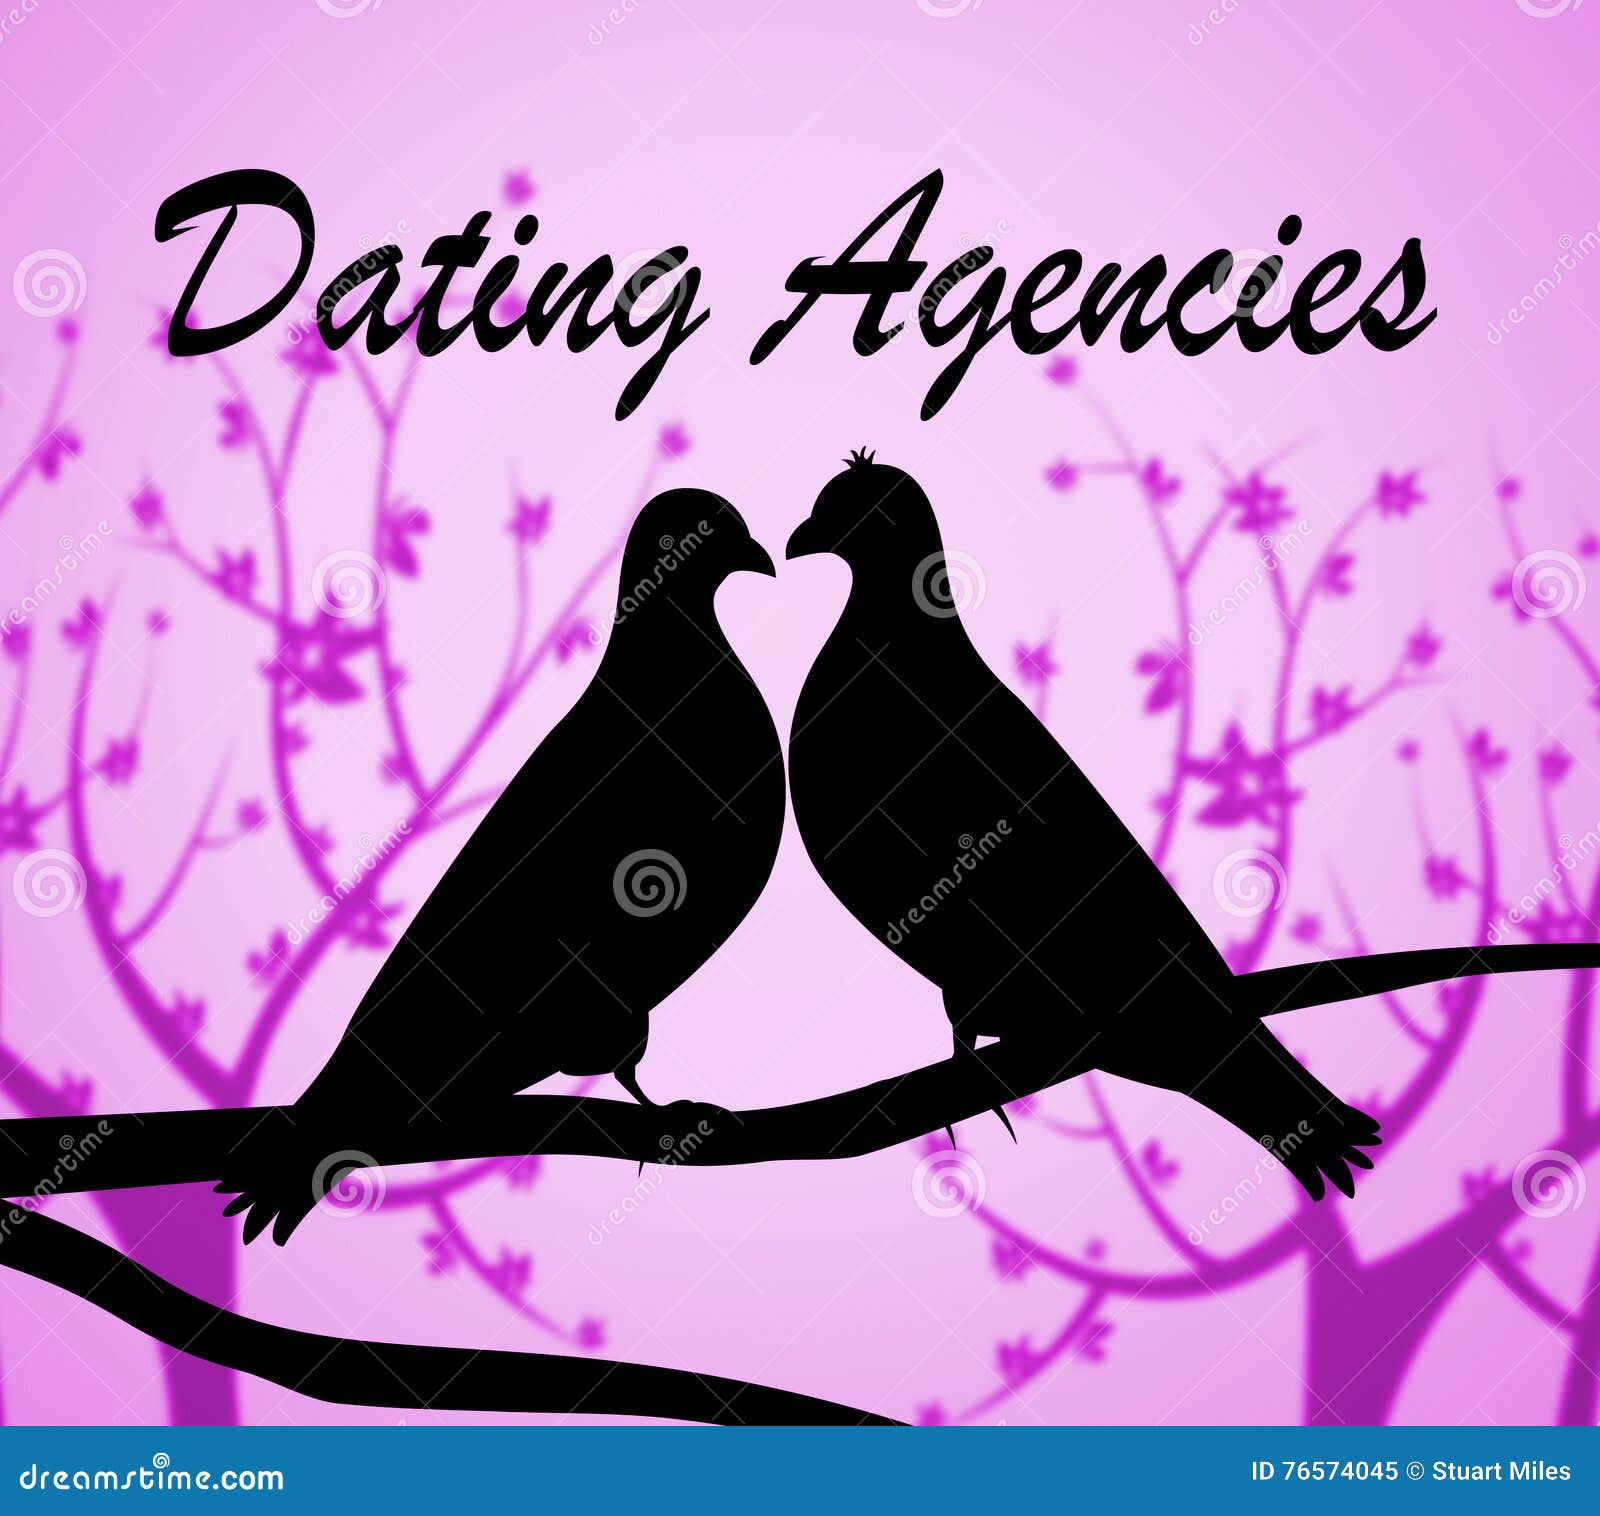 Dating agencies